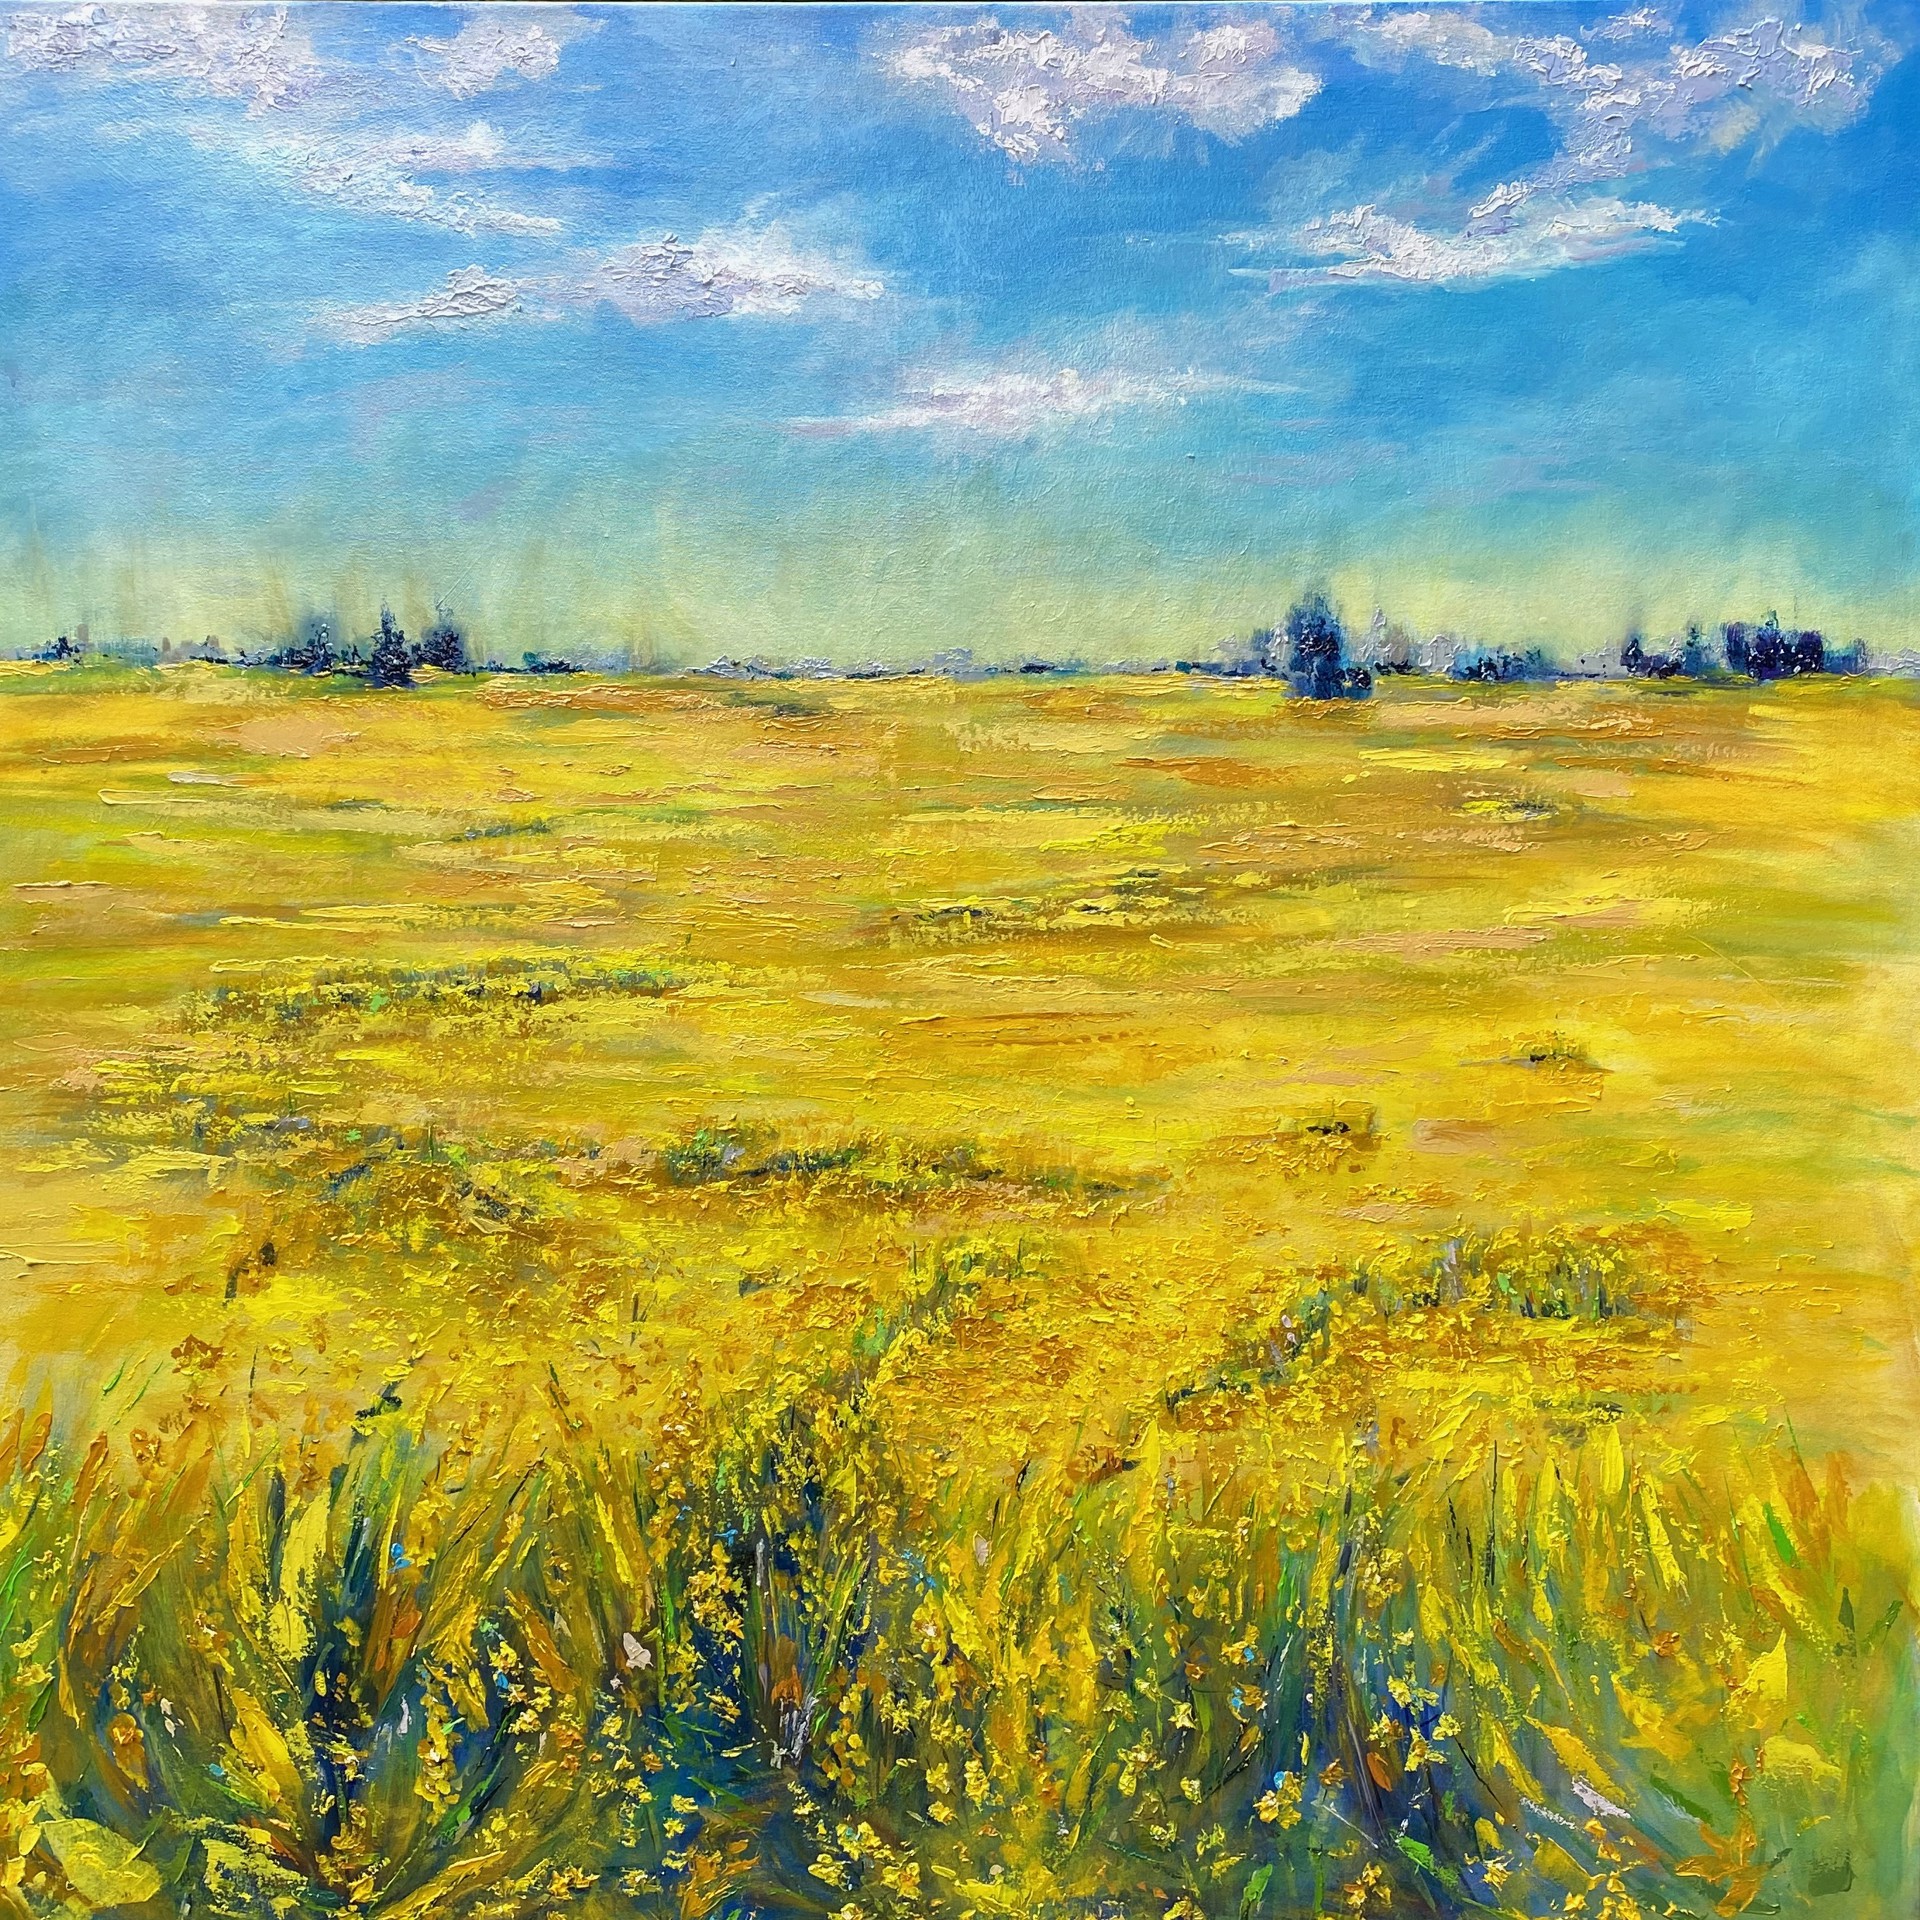 Golden Field by Carrie Ruddy